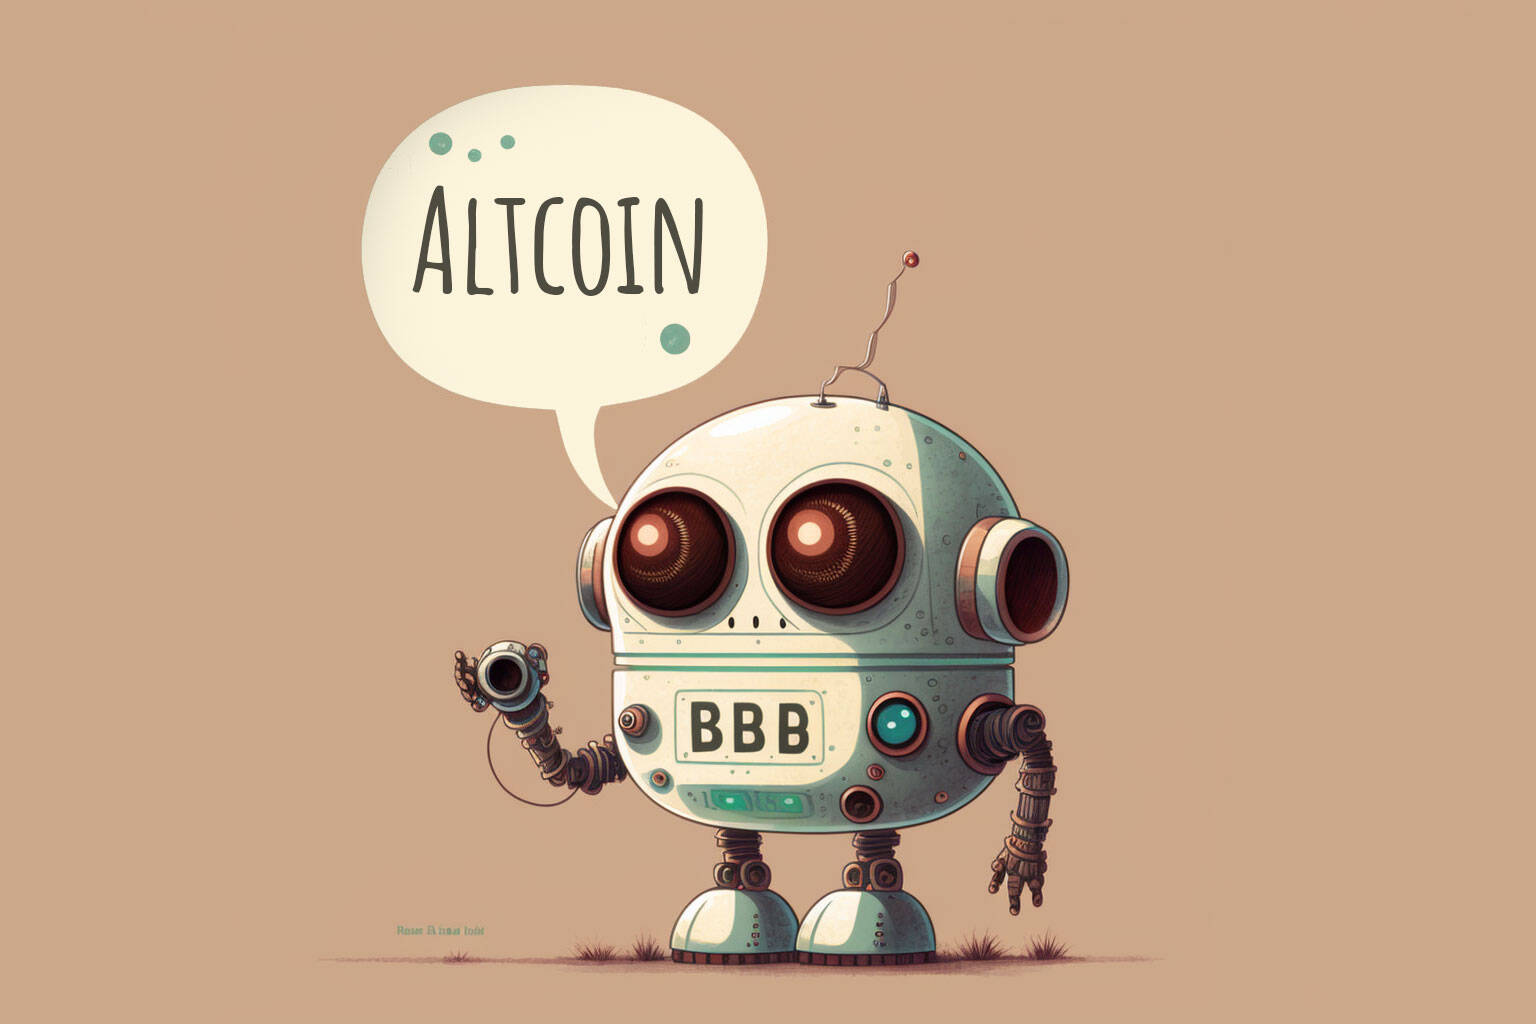 What makes a coin an Altcoin?